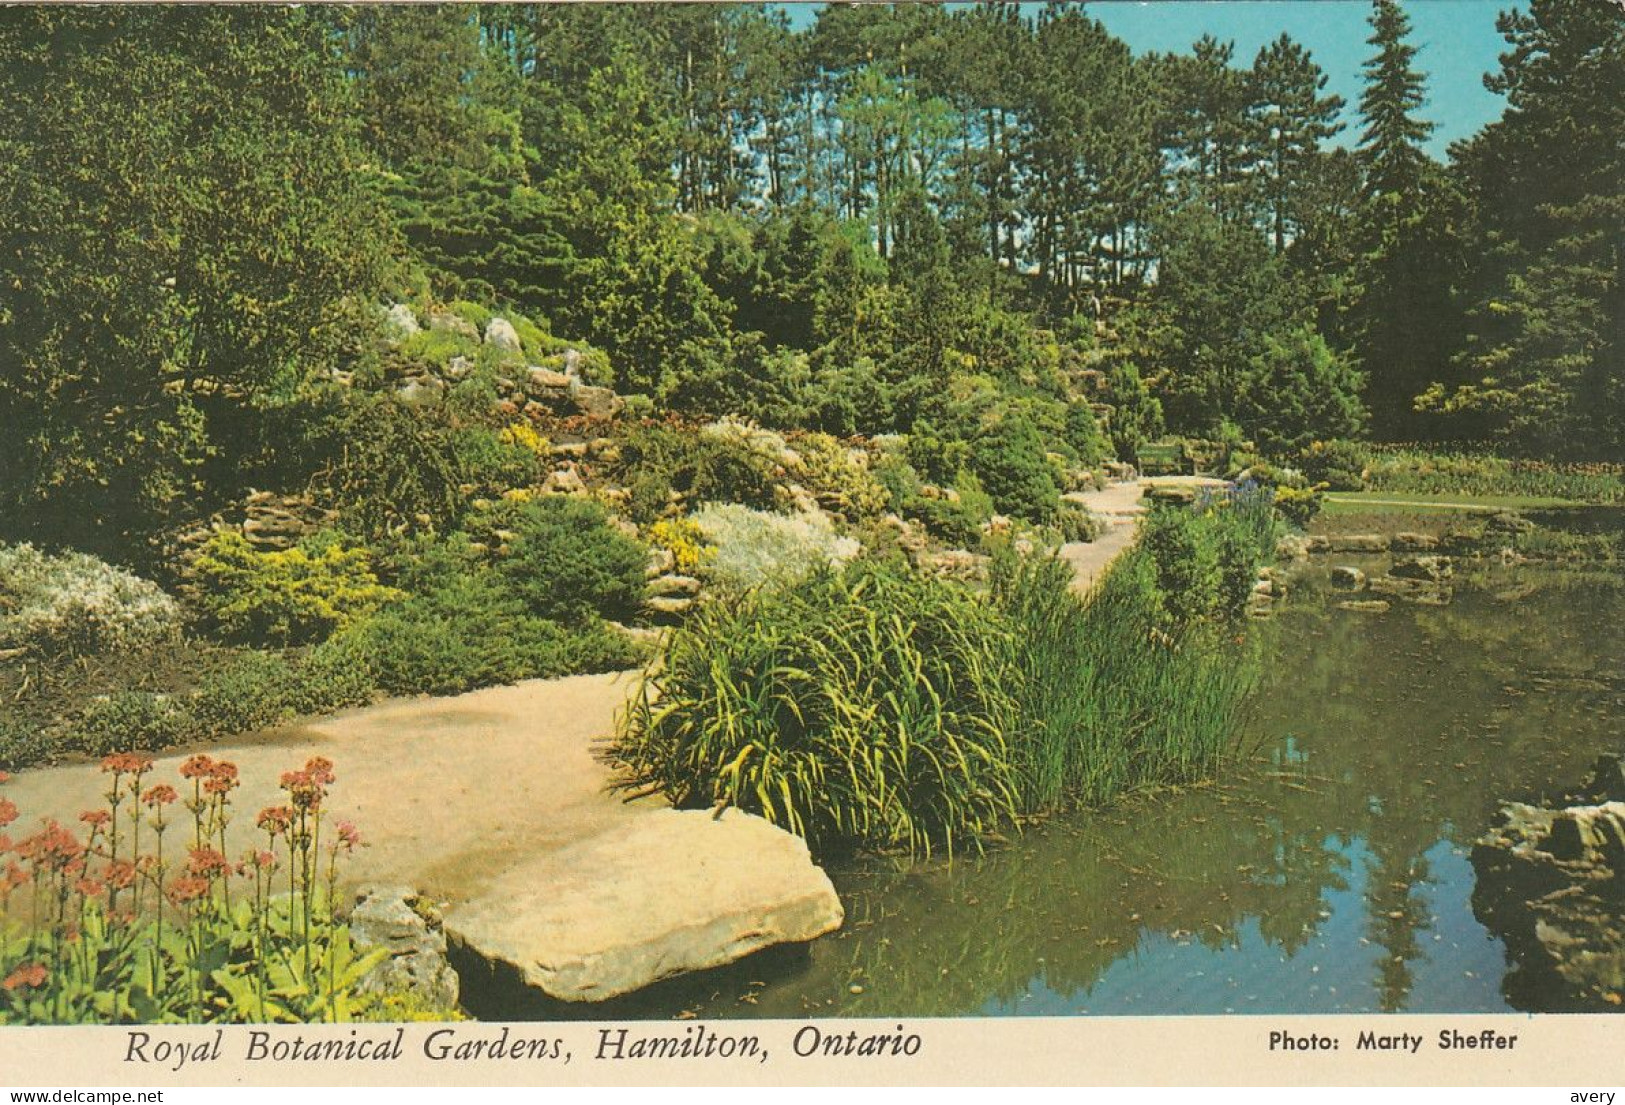 Royal Botanical Gardens, Hamilton, Ontario - Hamilton